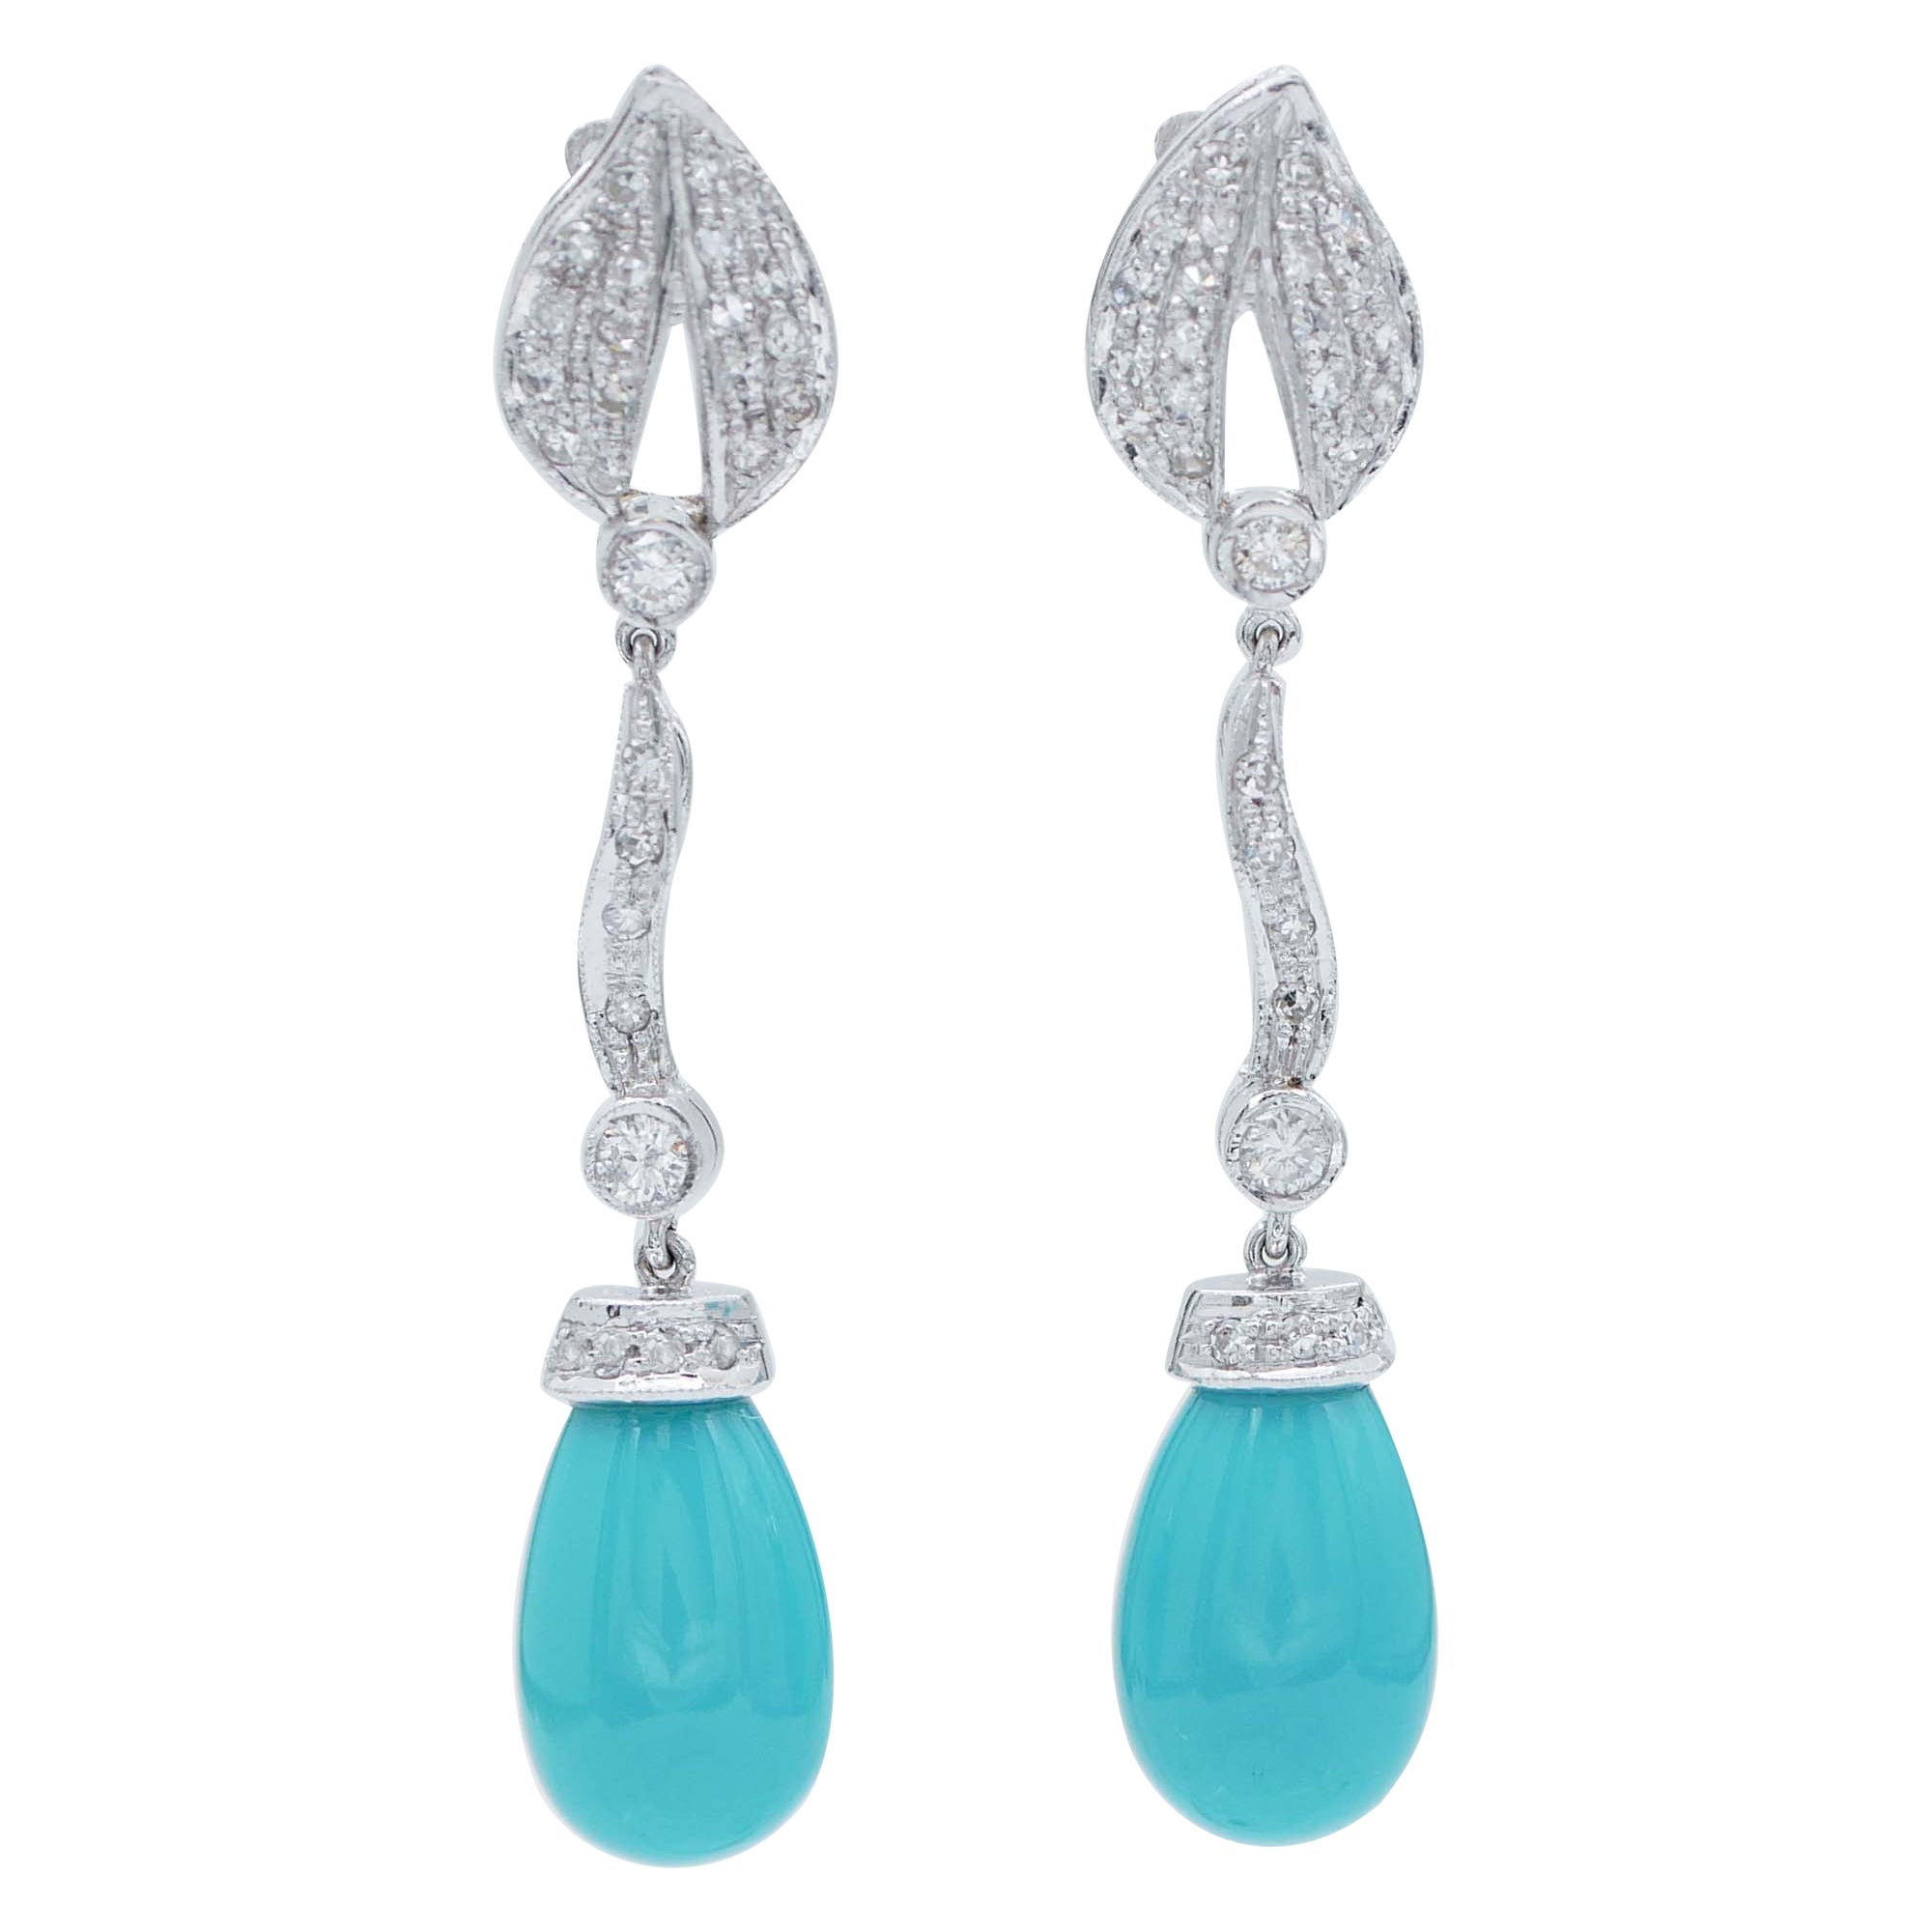 Turquoise, Diamonds, Platinum Dangle Earrings